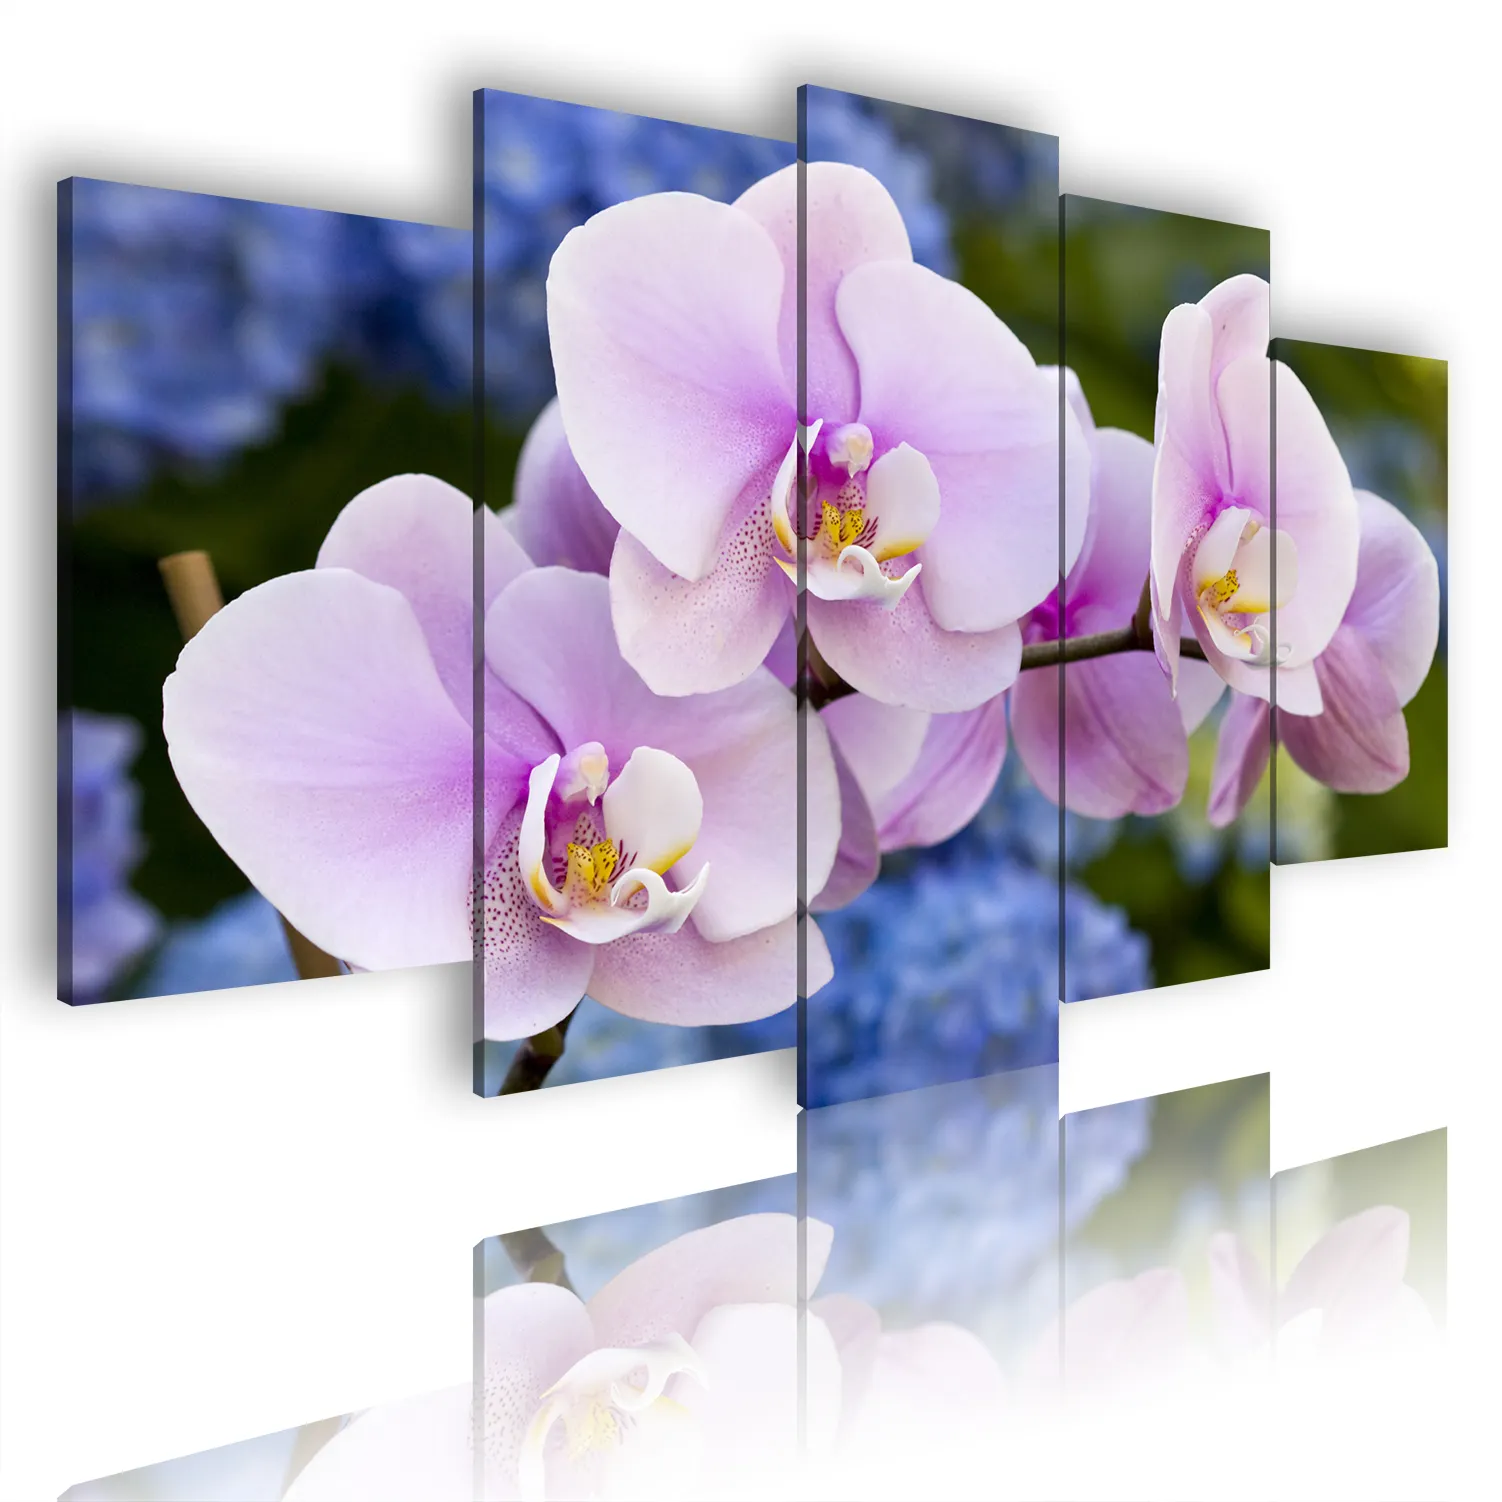 Lienzo de decoración para sala de estar, Pintura Artística de pared de orquídeas, mariposa abstracta antigua, flor púrpura, óleo